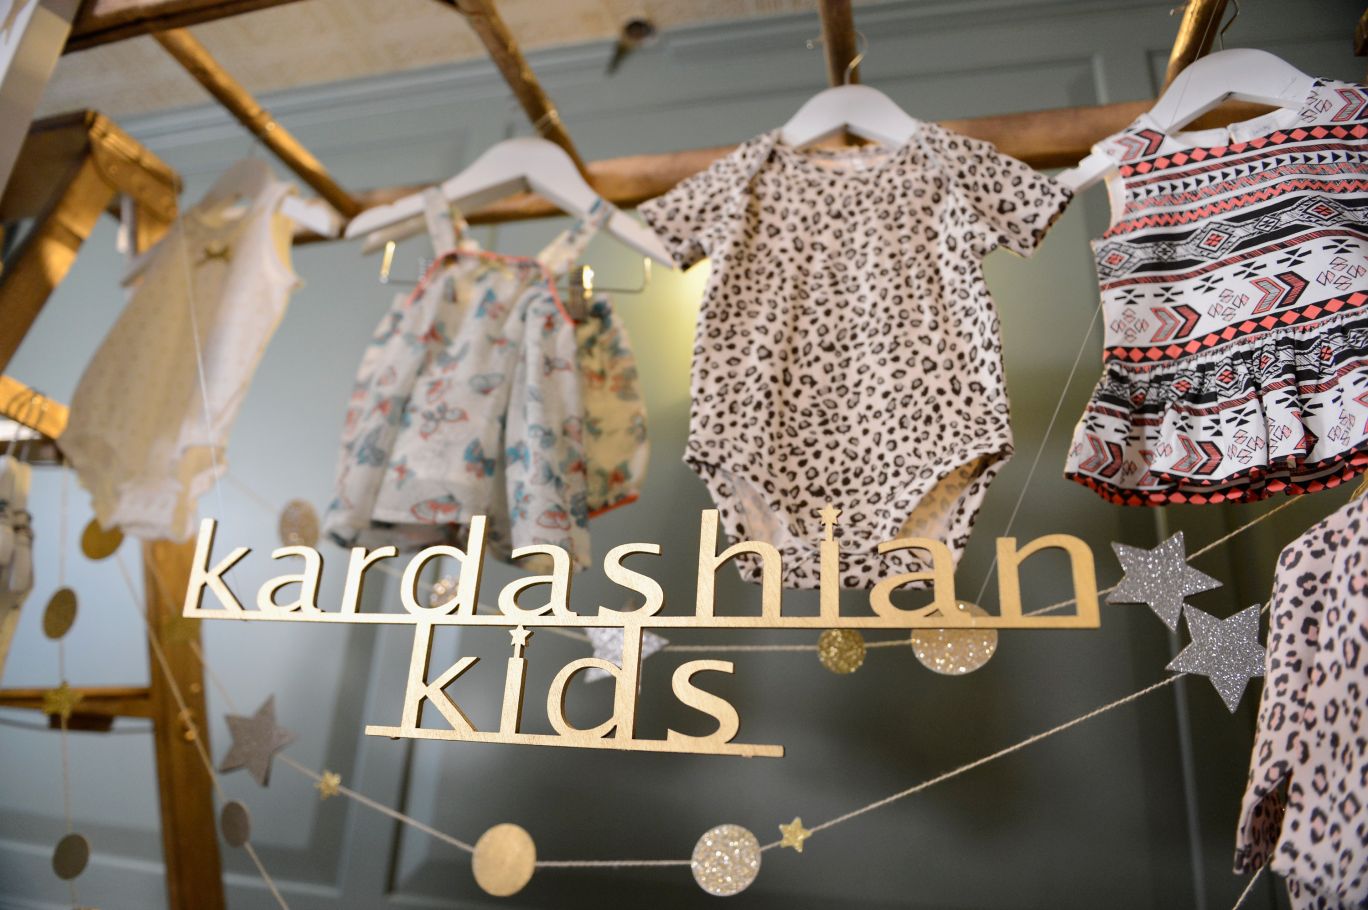 Kardashians for kids